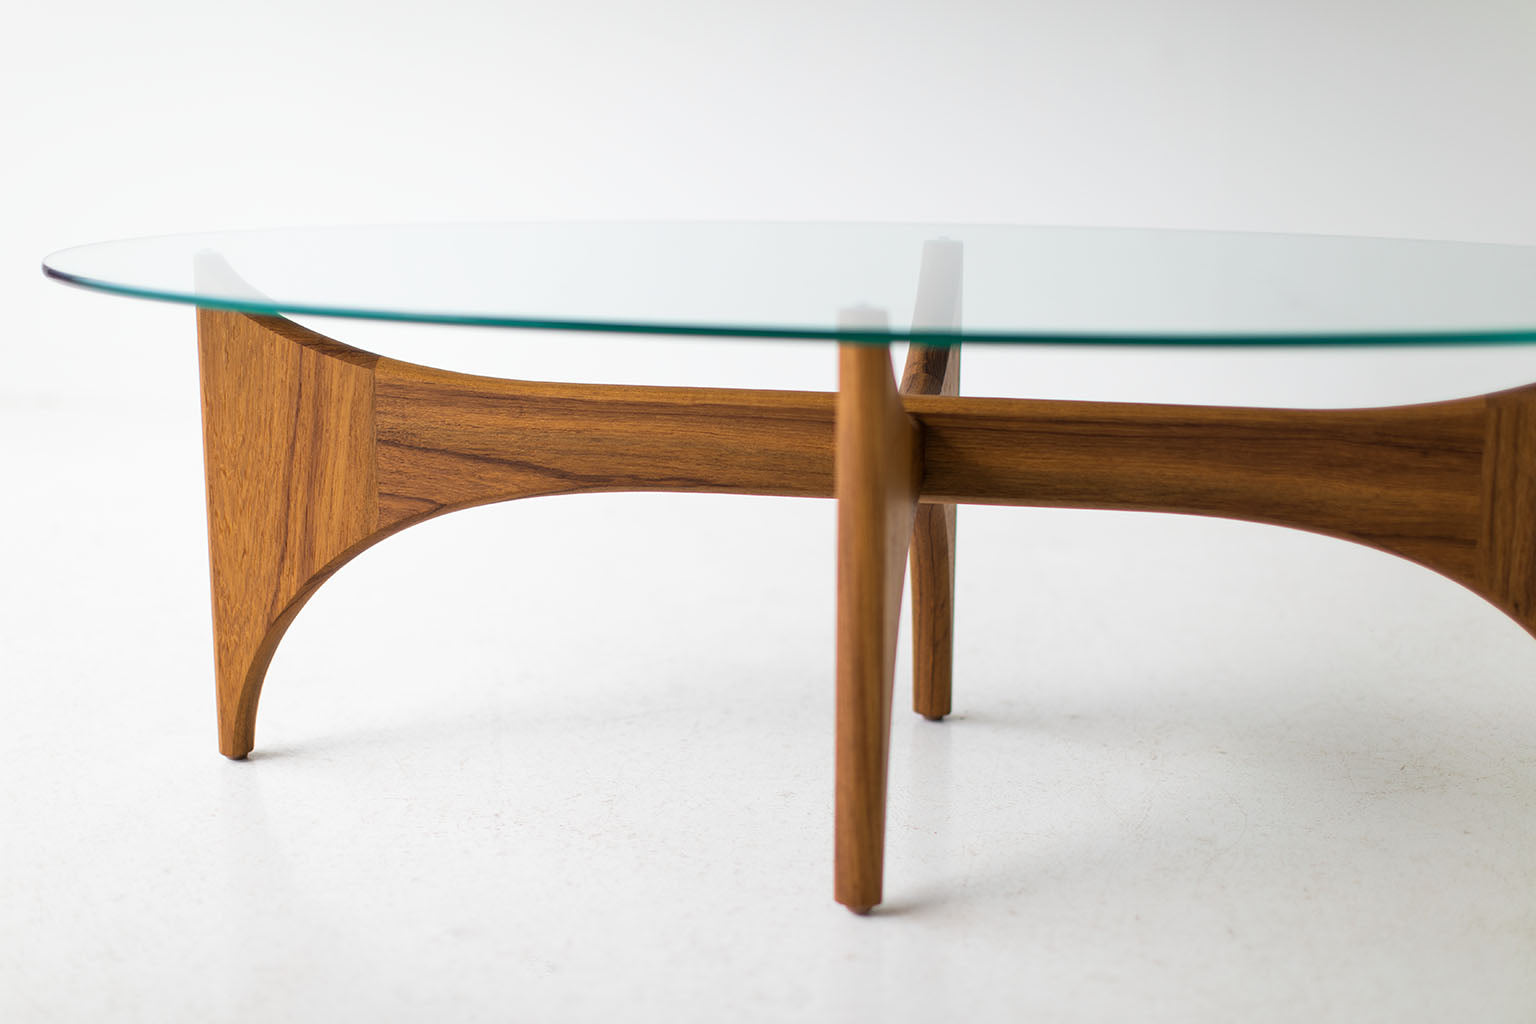           Modern-Teak-Coffee-Table-1514-Oval-03